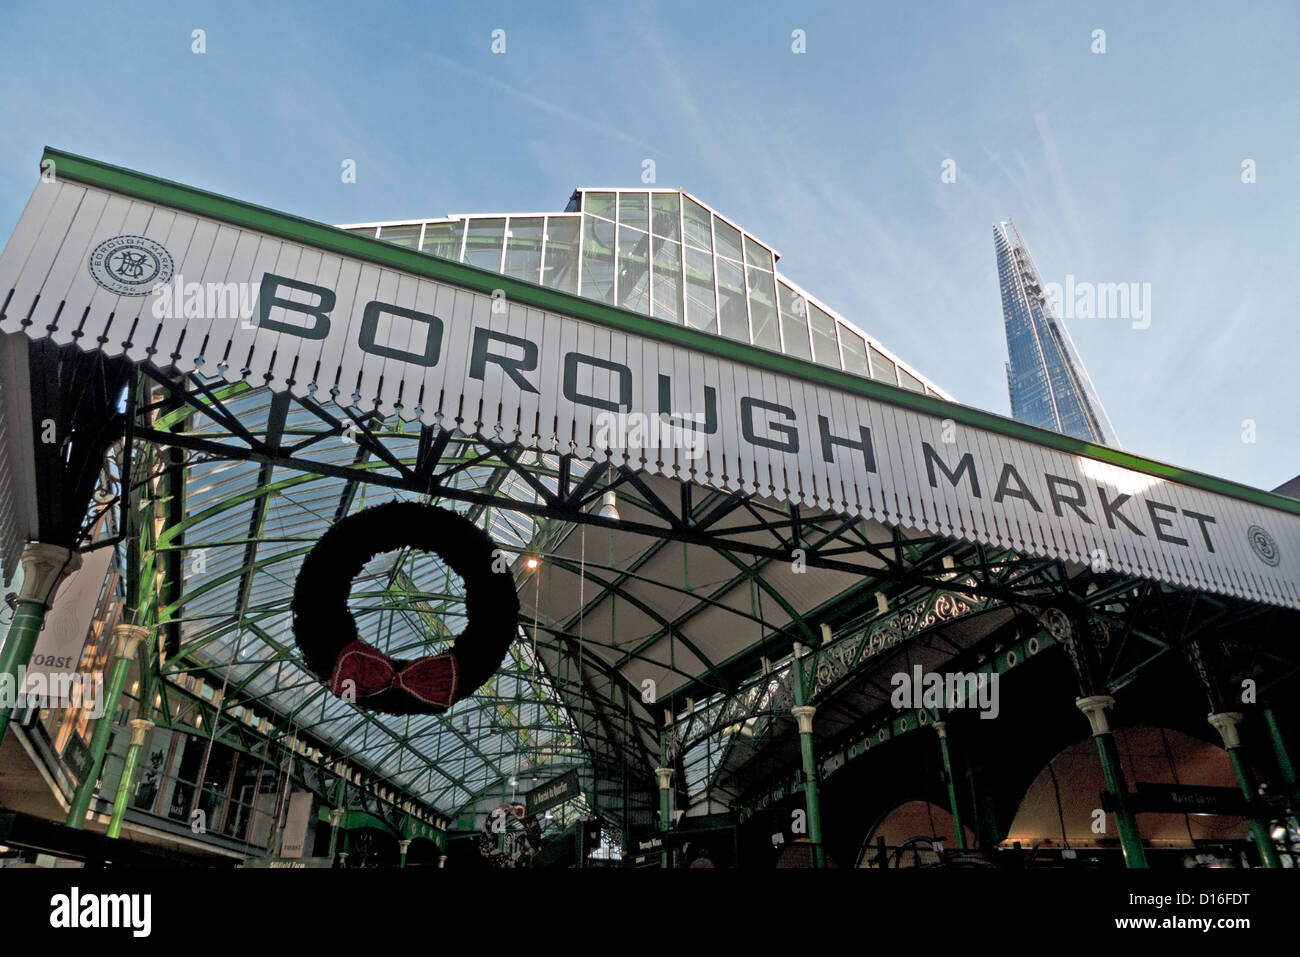 Borough Market sign, Christmas wreath & building with the Shard in the background London Bridge, London UK KATHY DEWITT Stock Photo